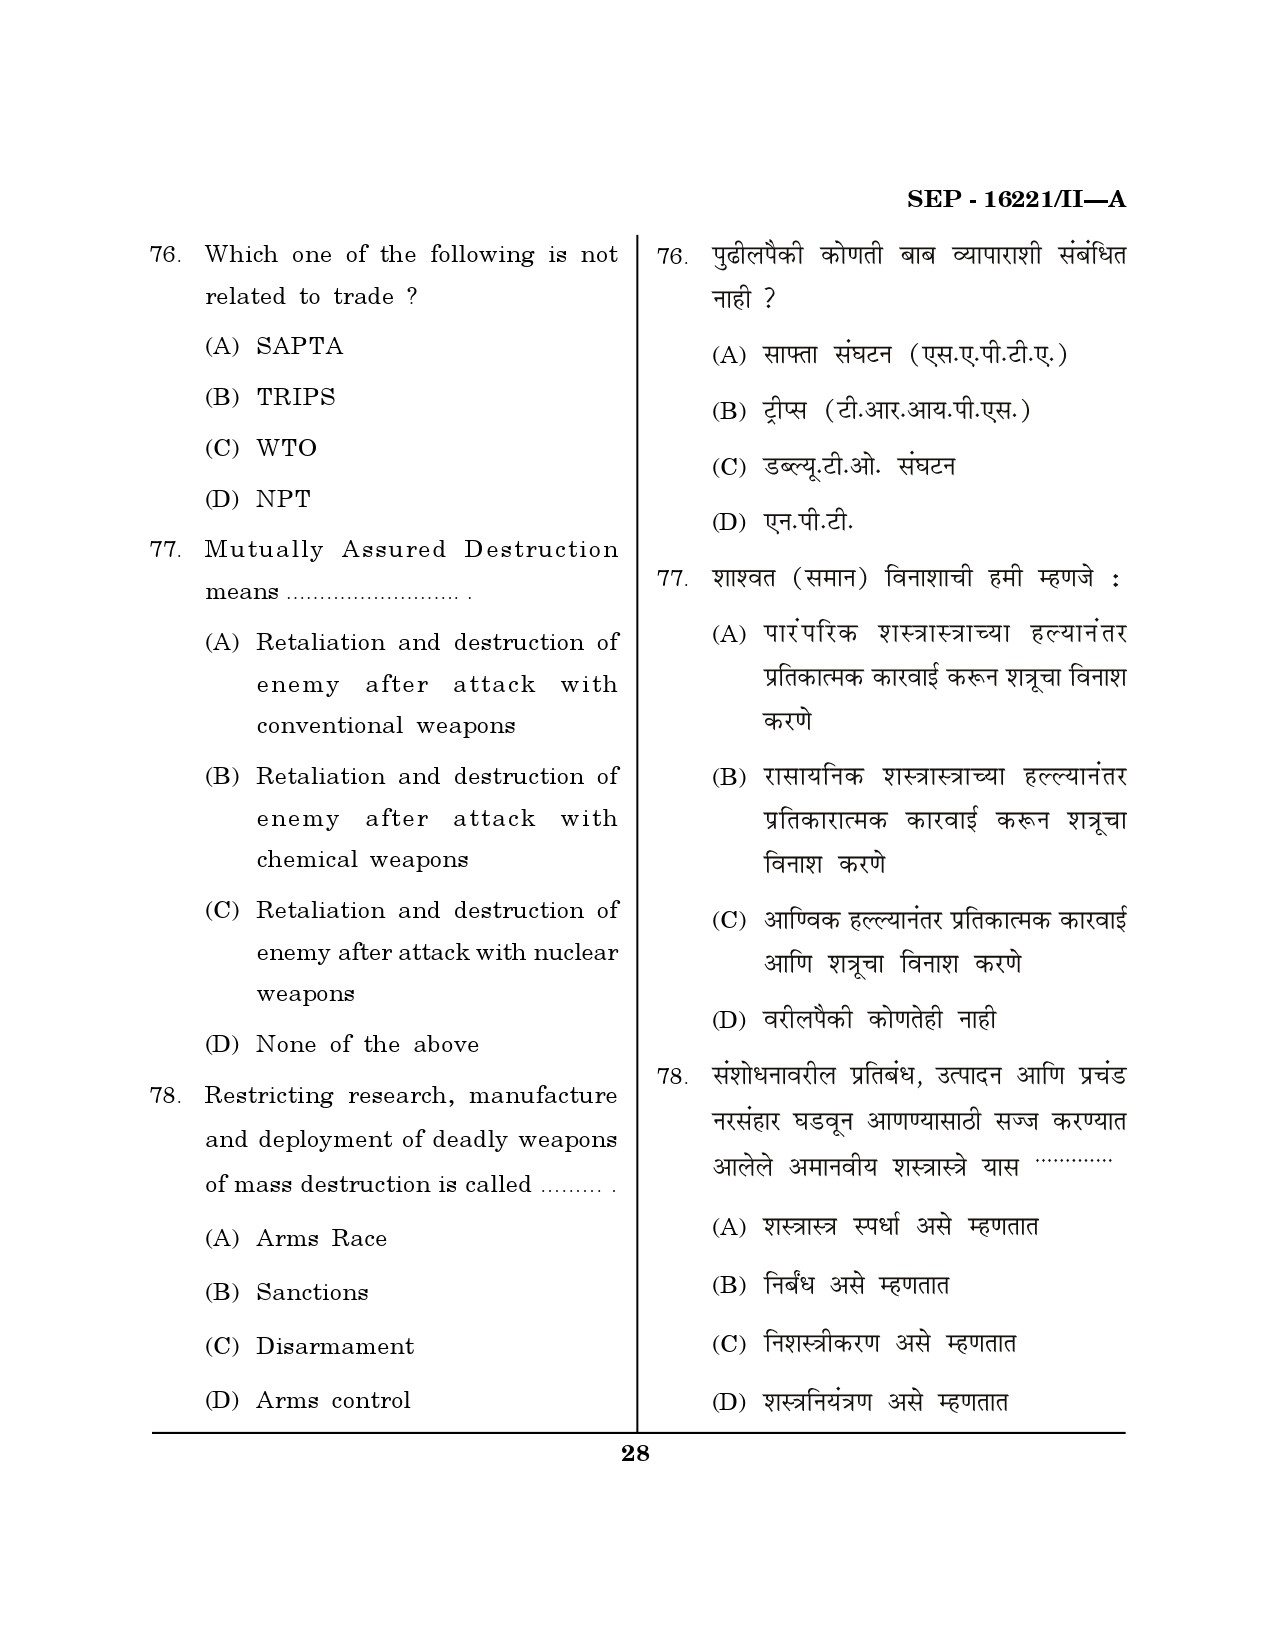 Maharashtra SET Defence and Strategic Studies Exam Question Paper September 2021 27